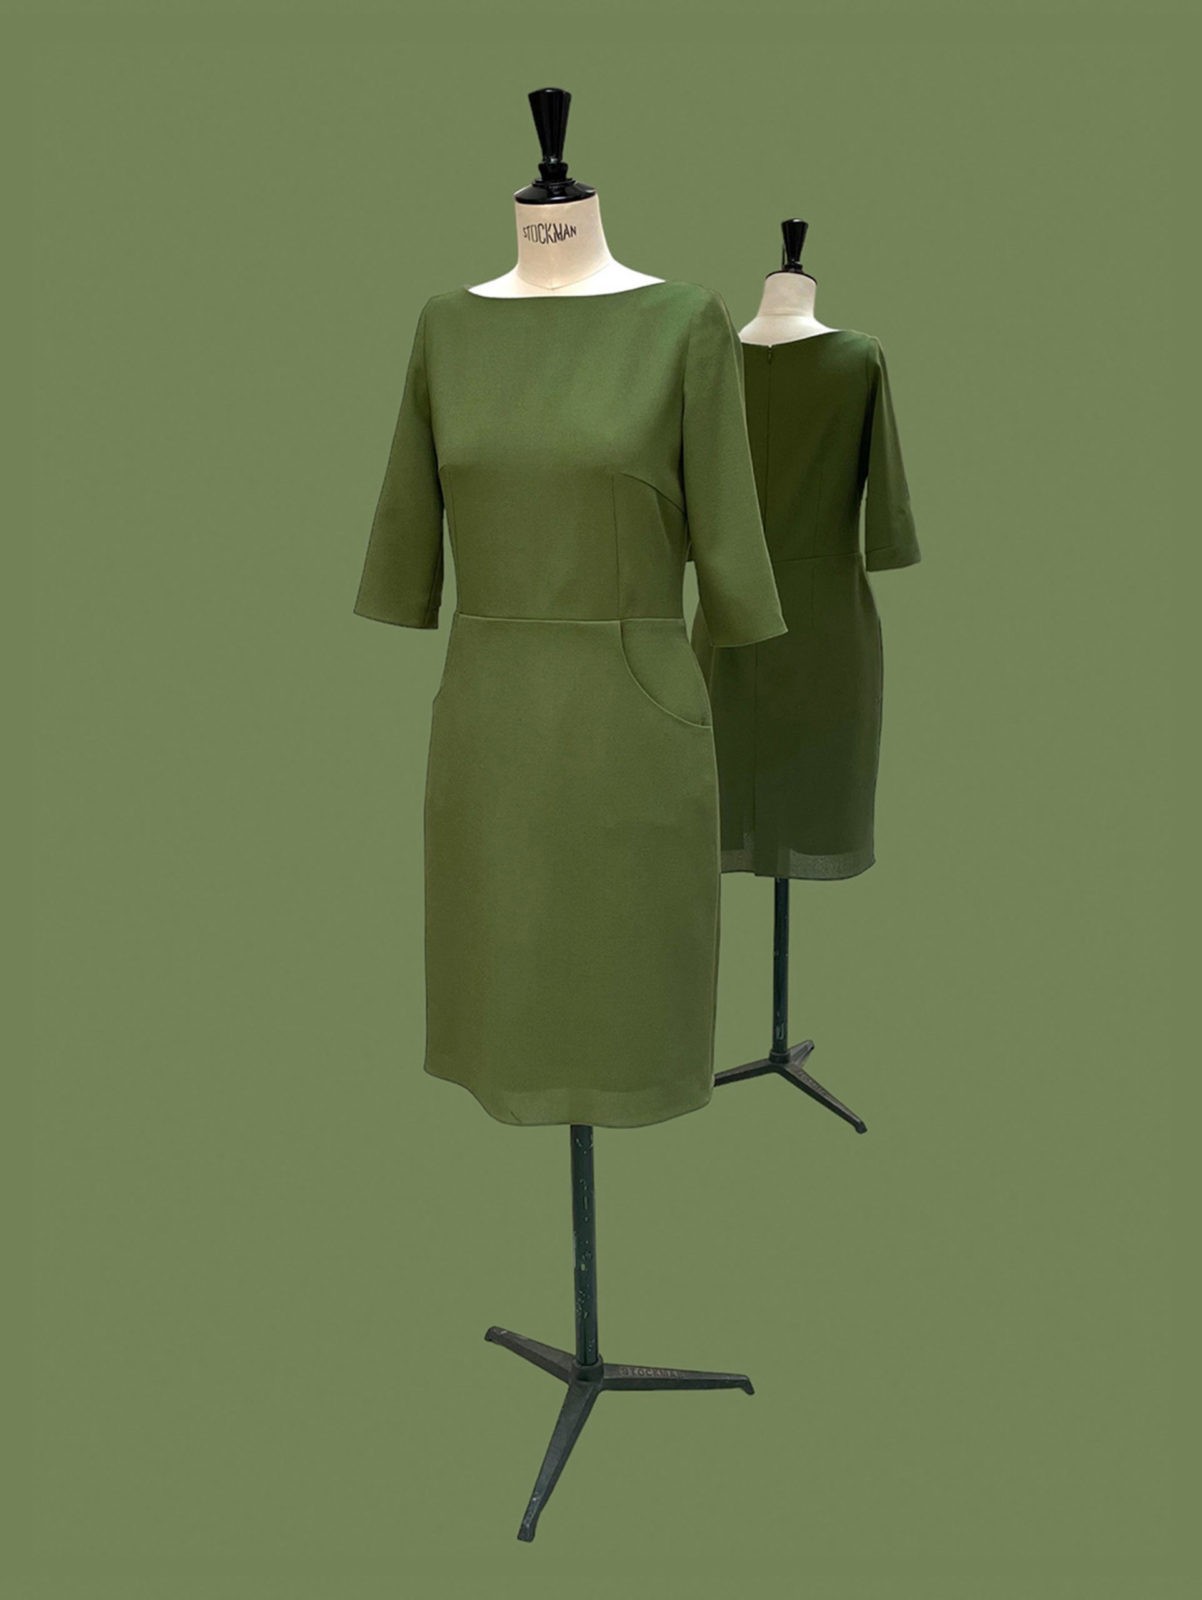 Merja's dress,ANNARUOHONENParis, Made-to-Order